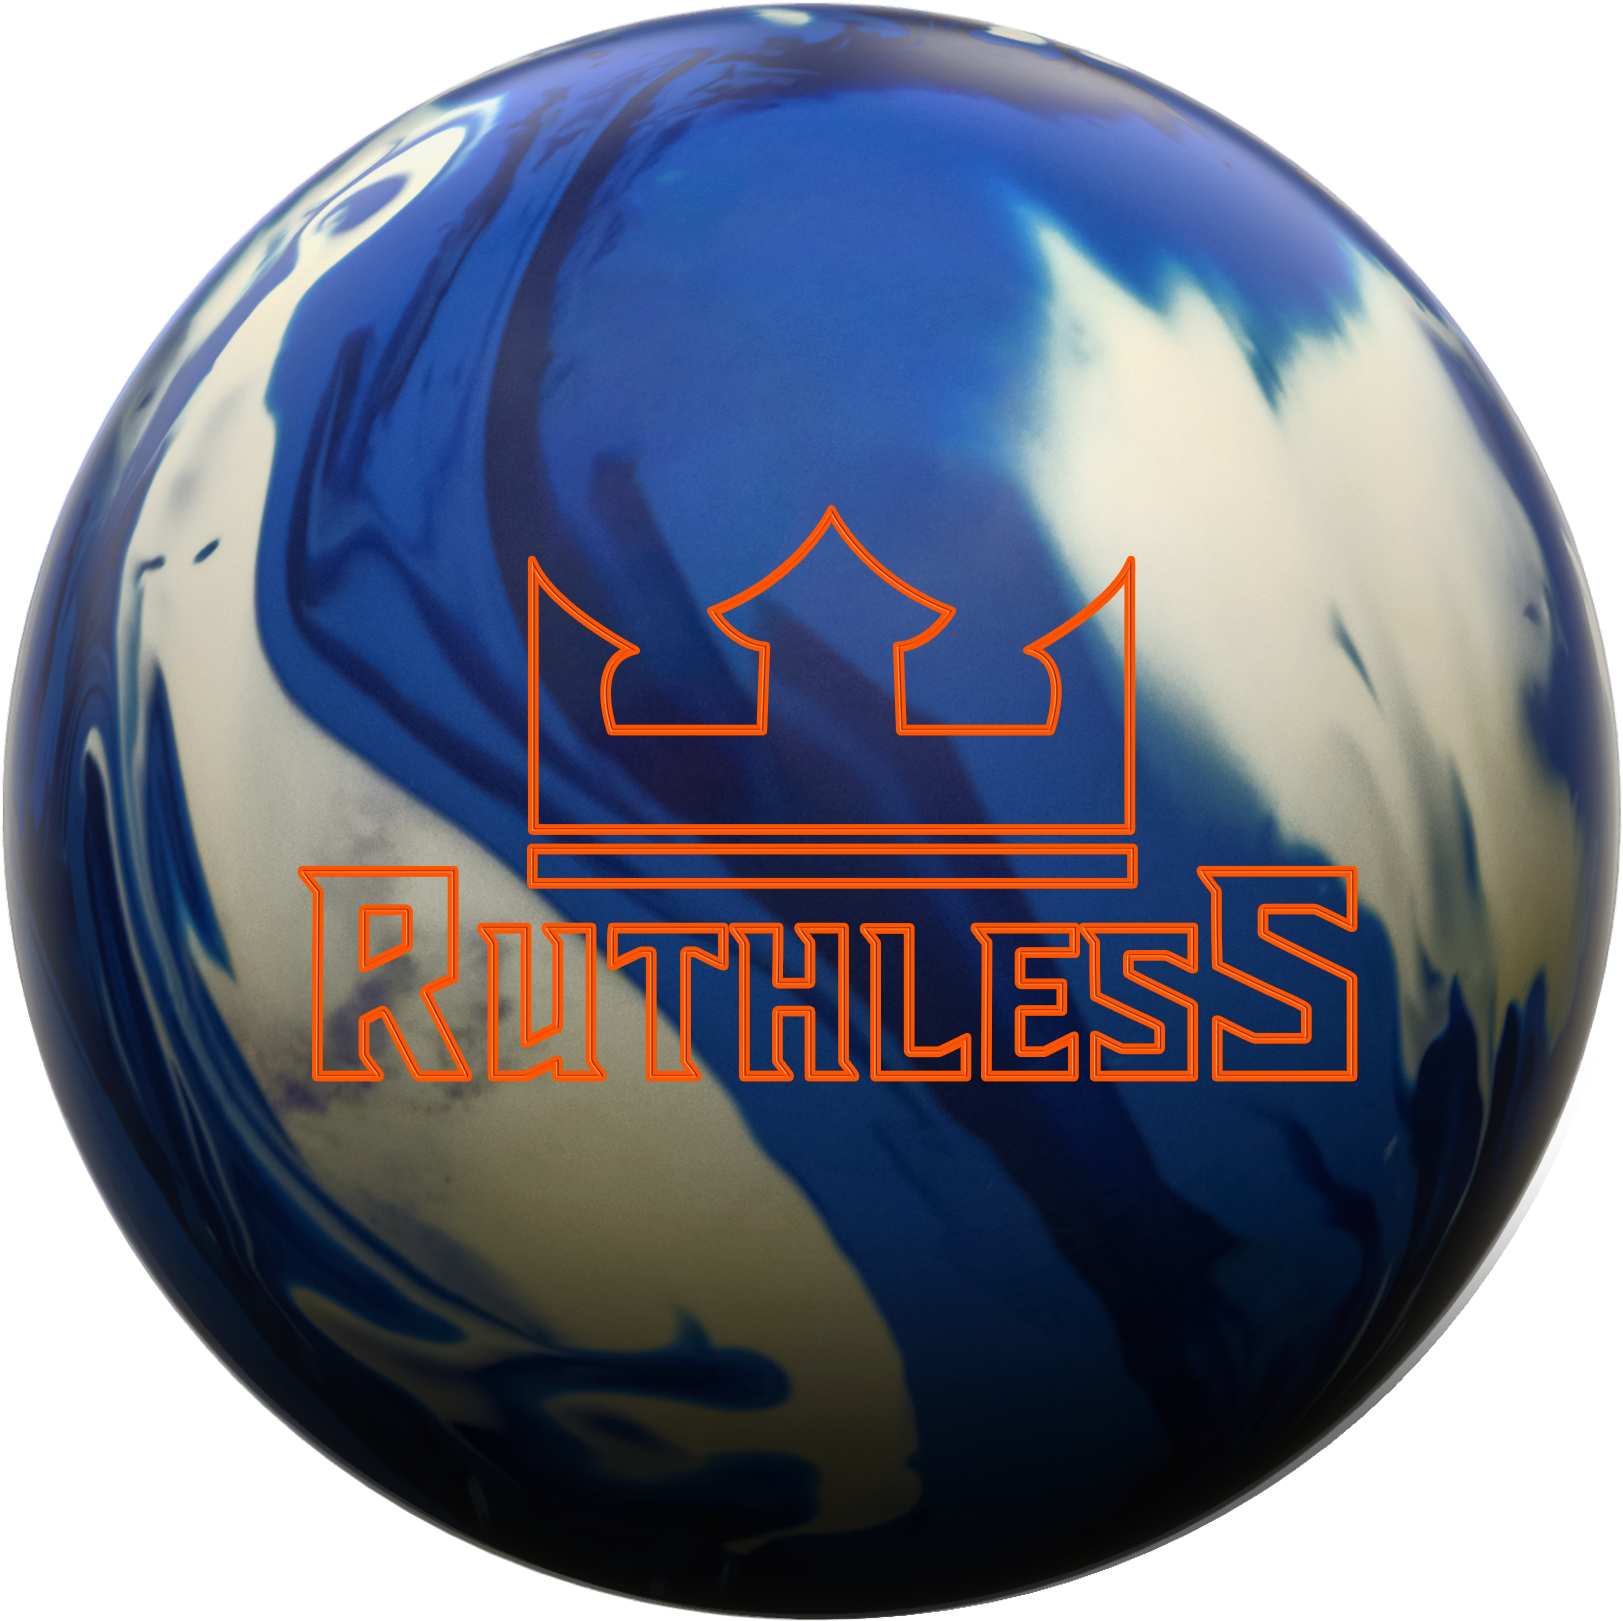 Blue Orange Ruthless Bowling Ball PNG